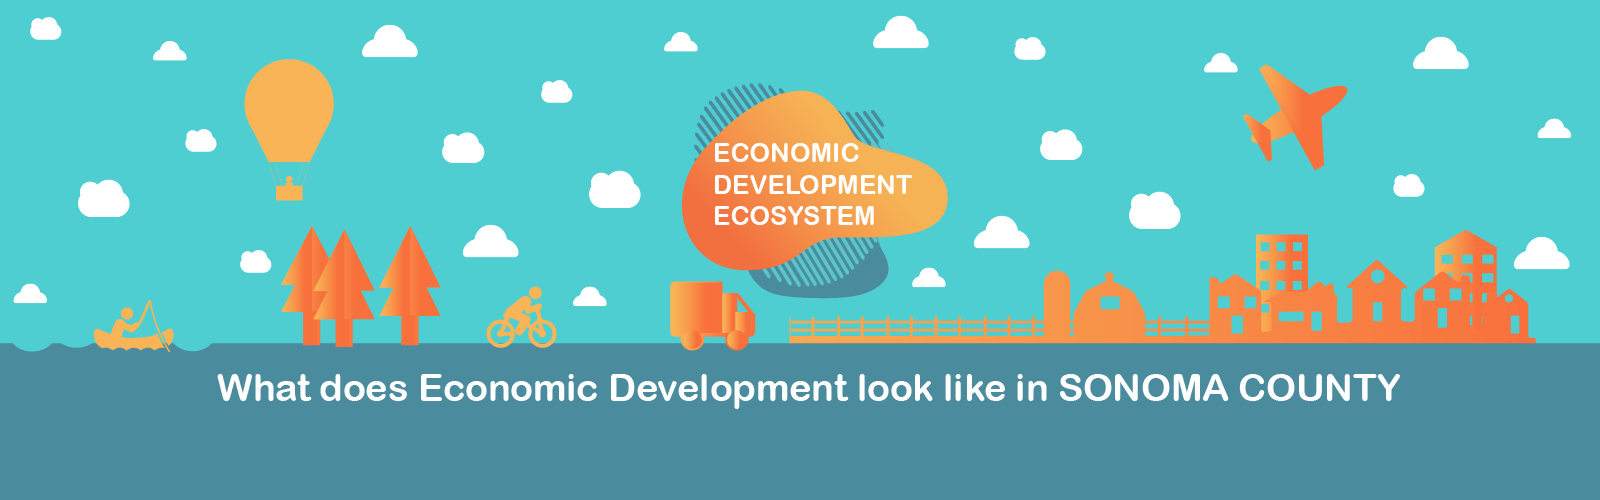 Economic Development Ecosystem. What does Economic Development look like in Sonoma County?